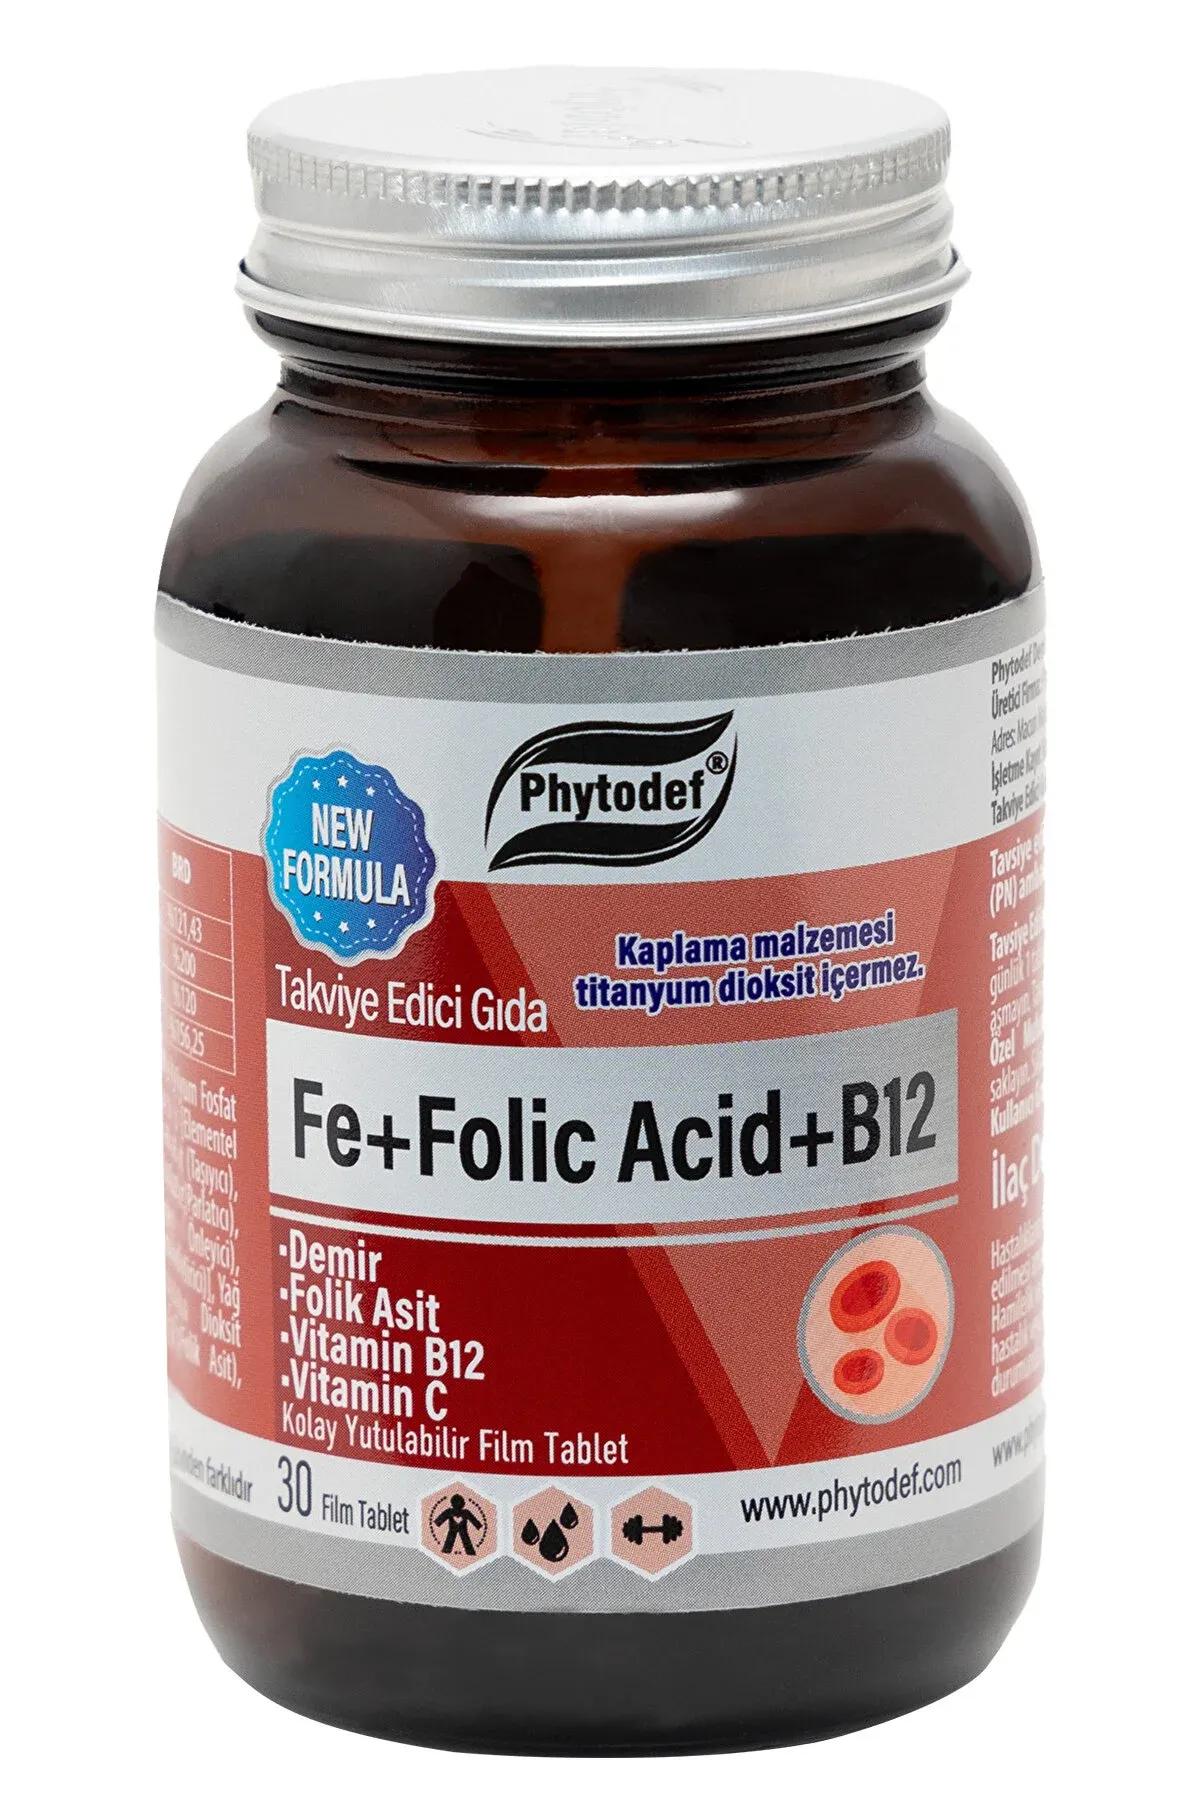 Phytodef Demir + Folik Asit + Vitamin B12 + Vitamin C İnceleme